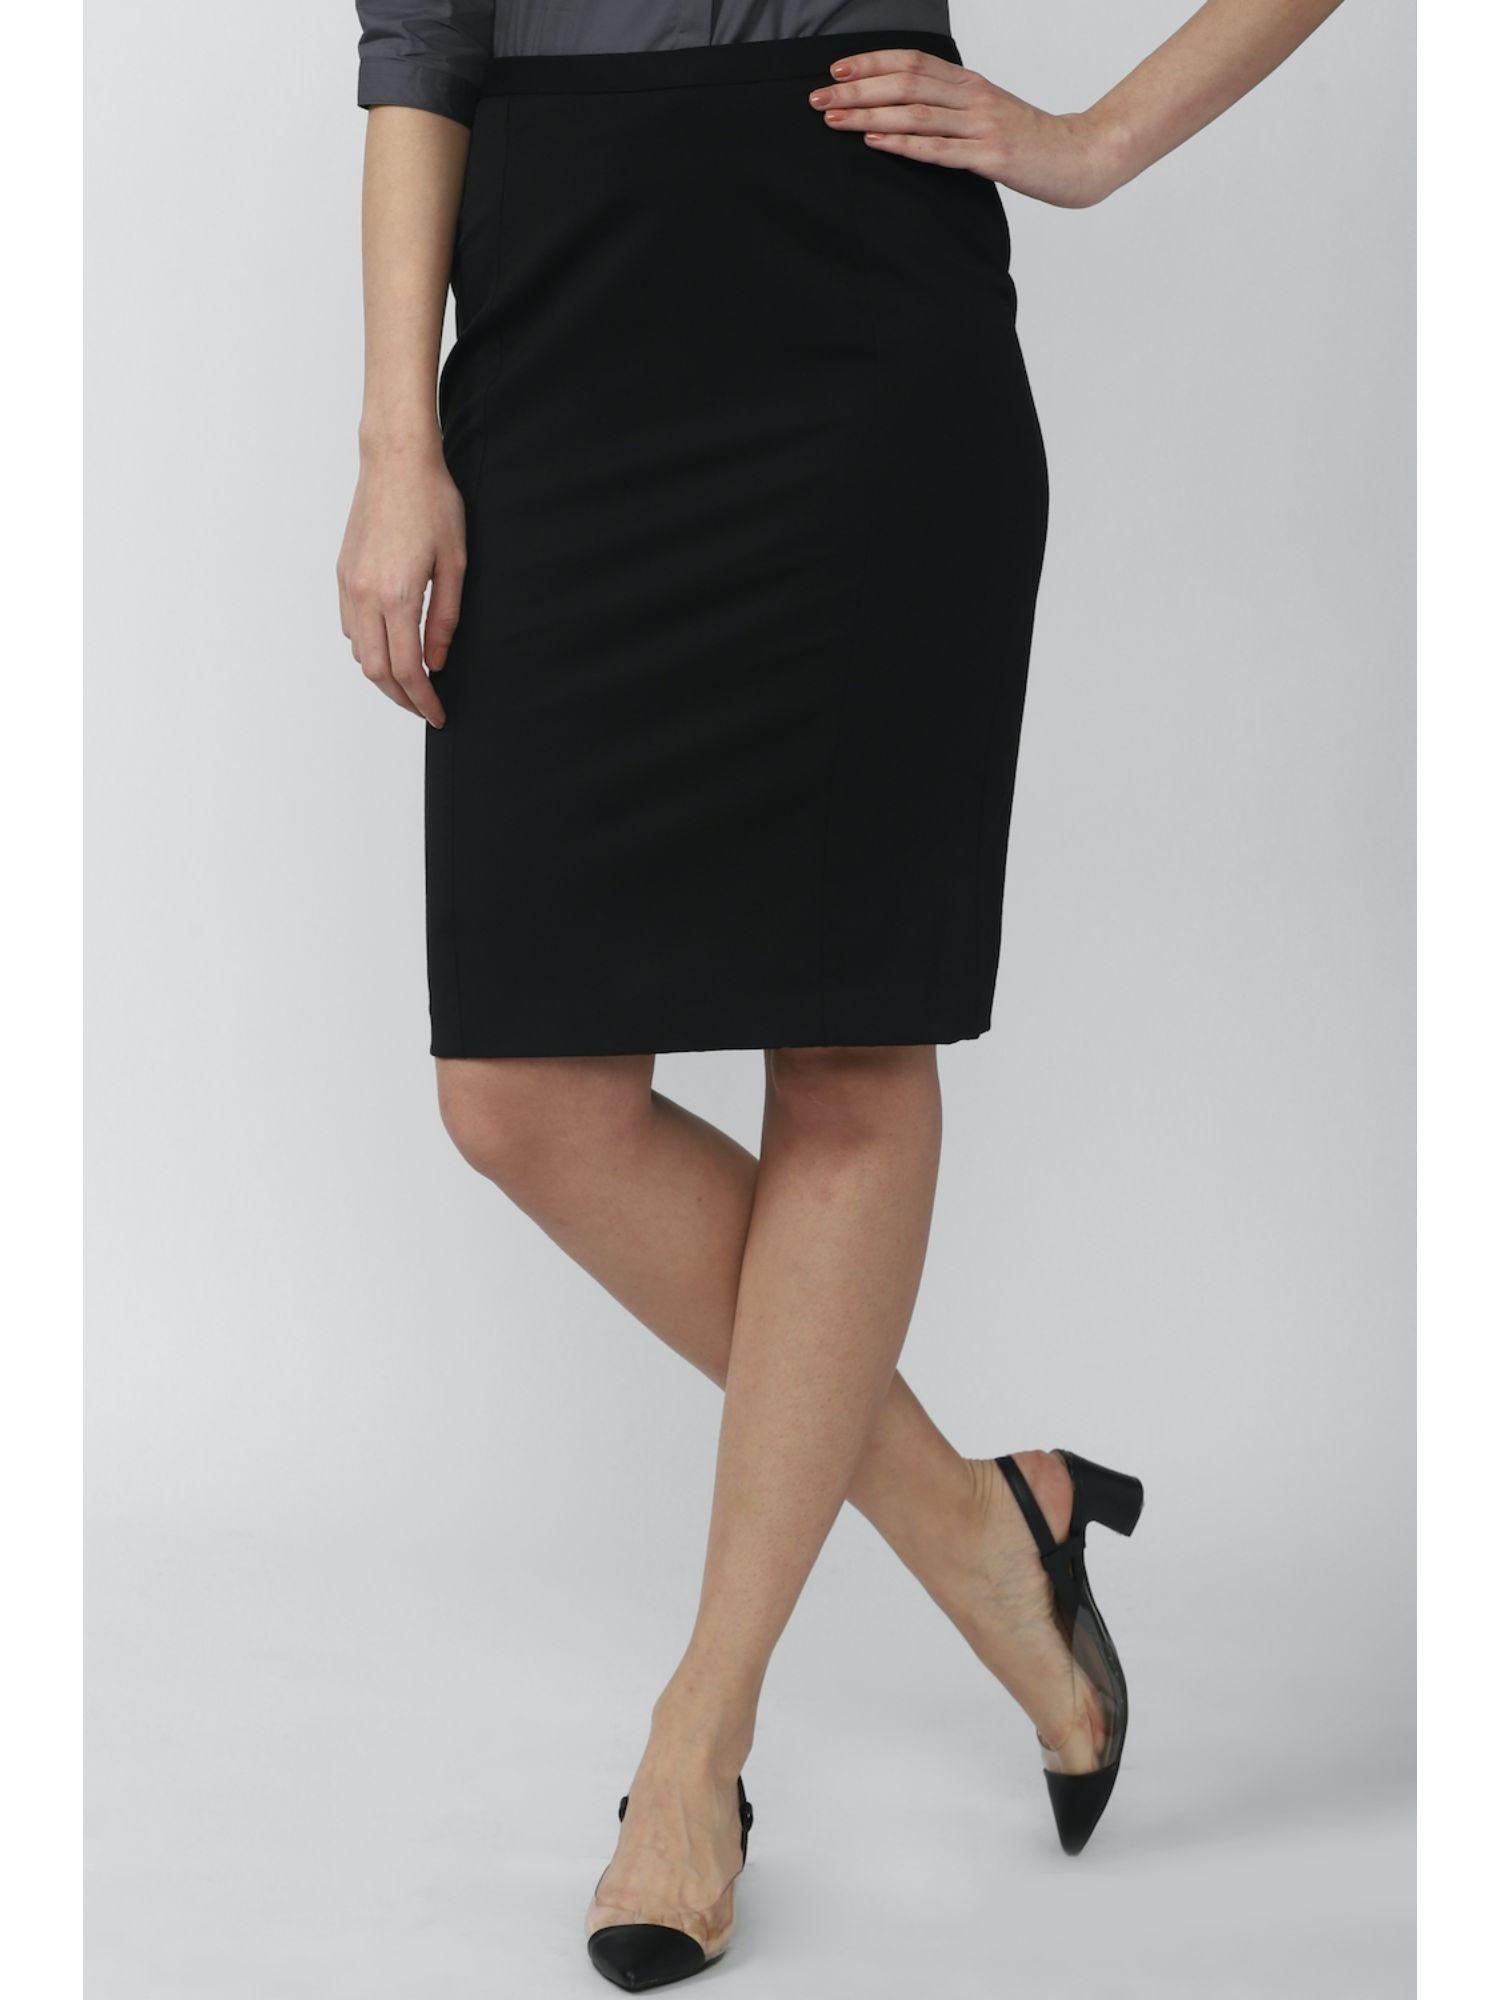 black solid skirt